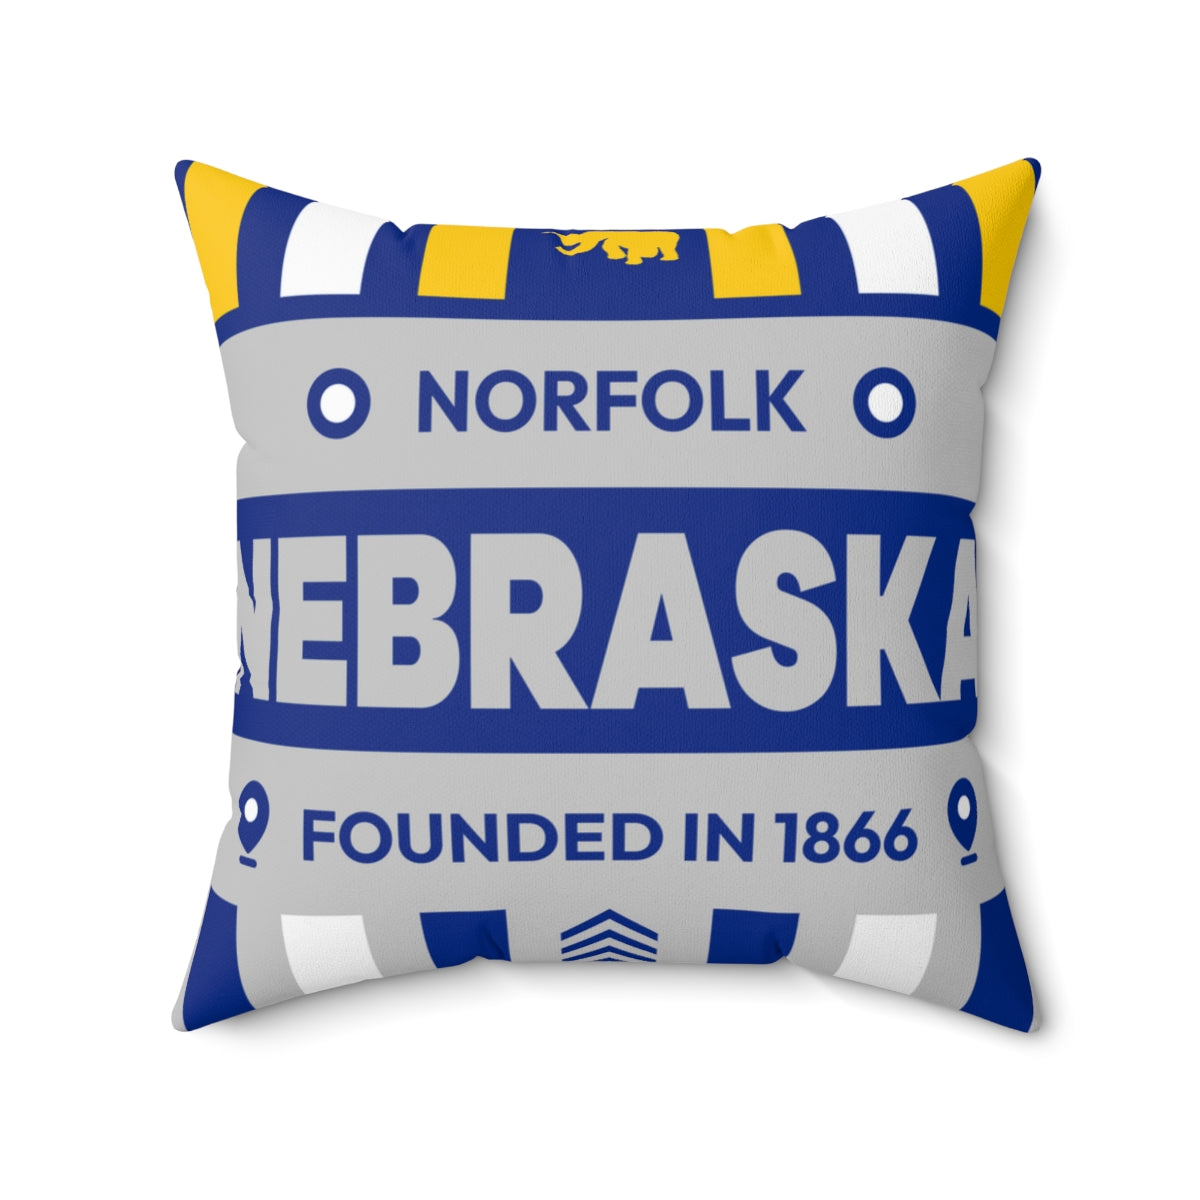 20"x20" pillow design for Norfolk, Nebraska Top view.